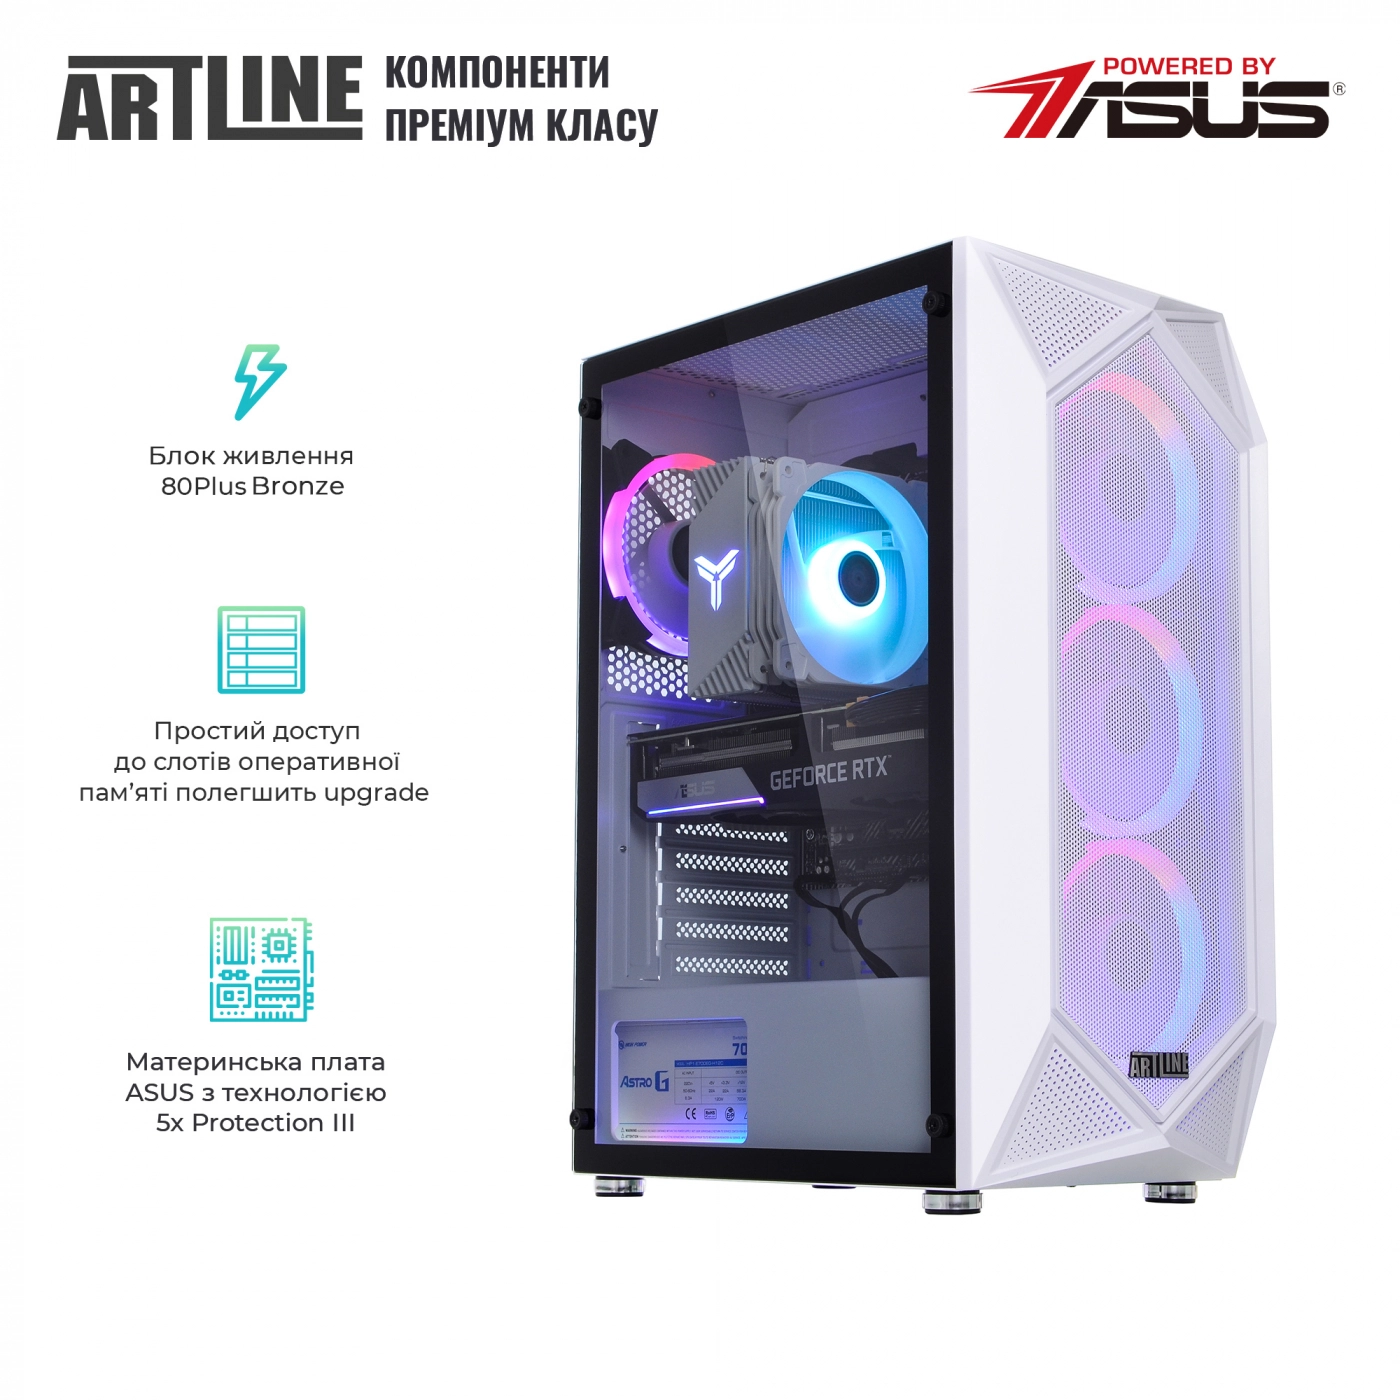 Купити Комп'ютер ARTLINE Gaming X75White (X75Whitev42) - фото 4